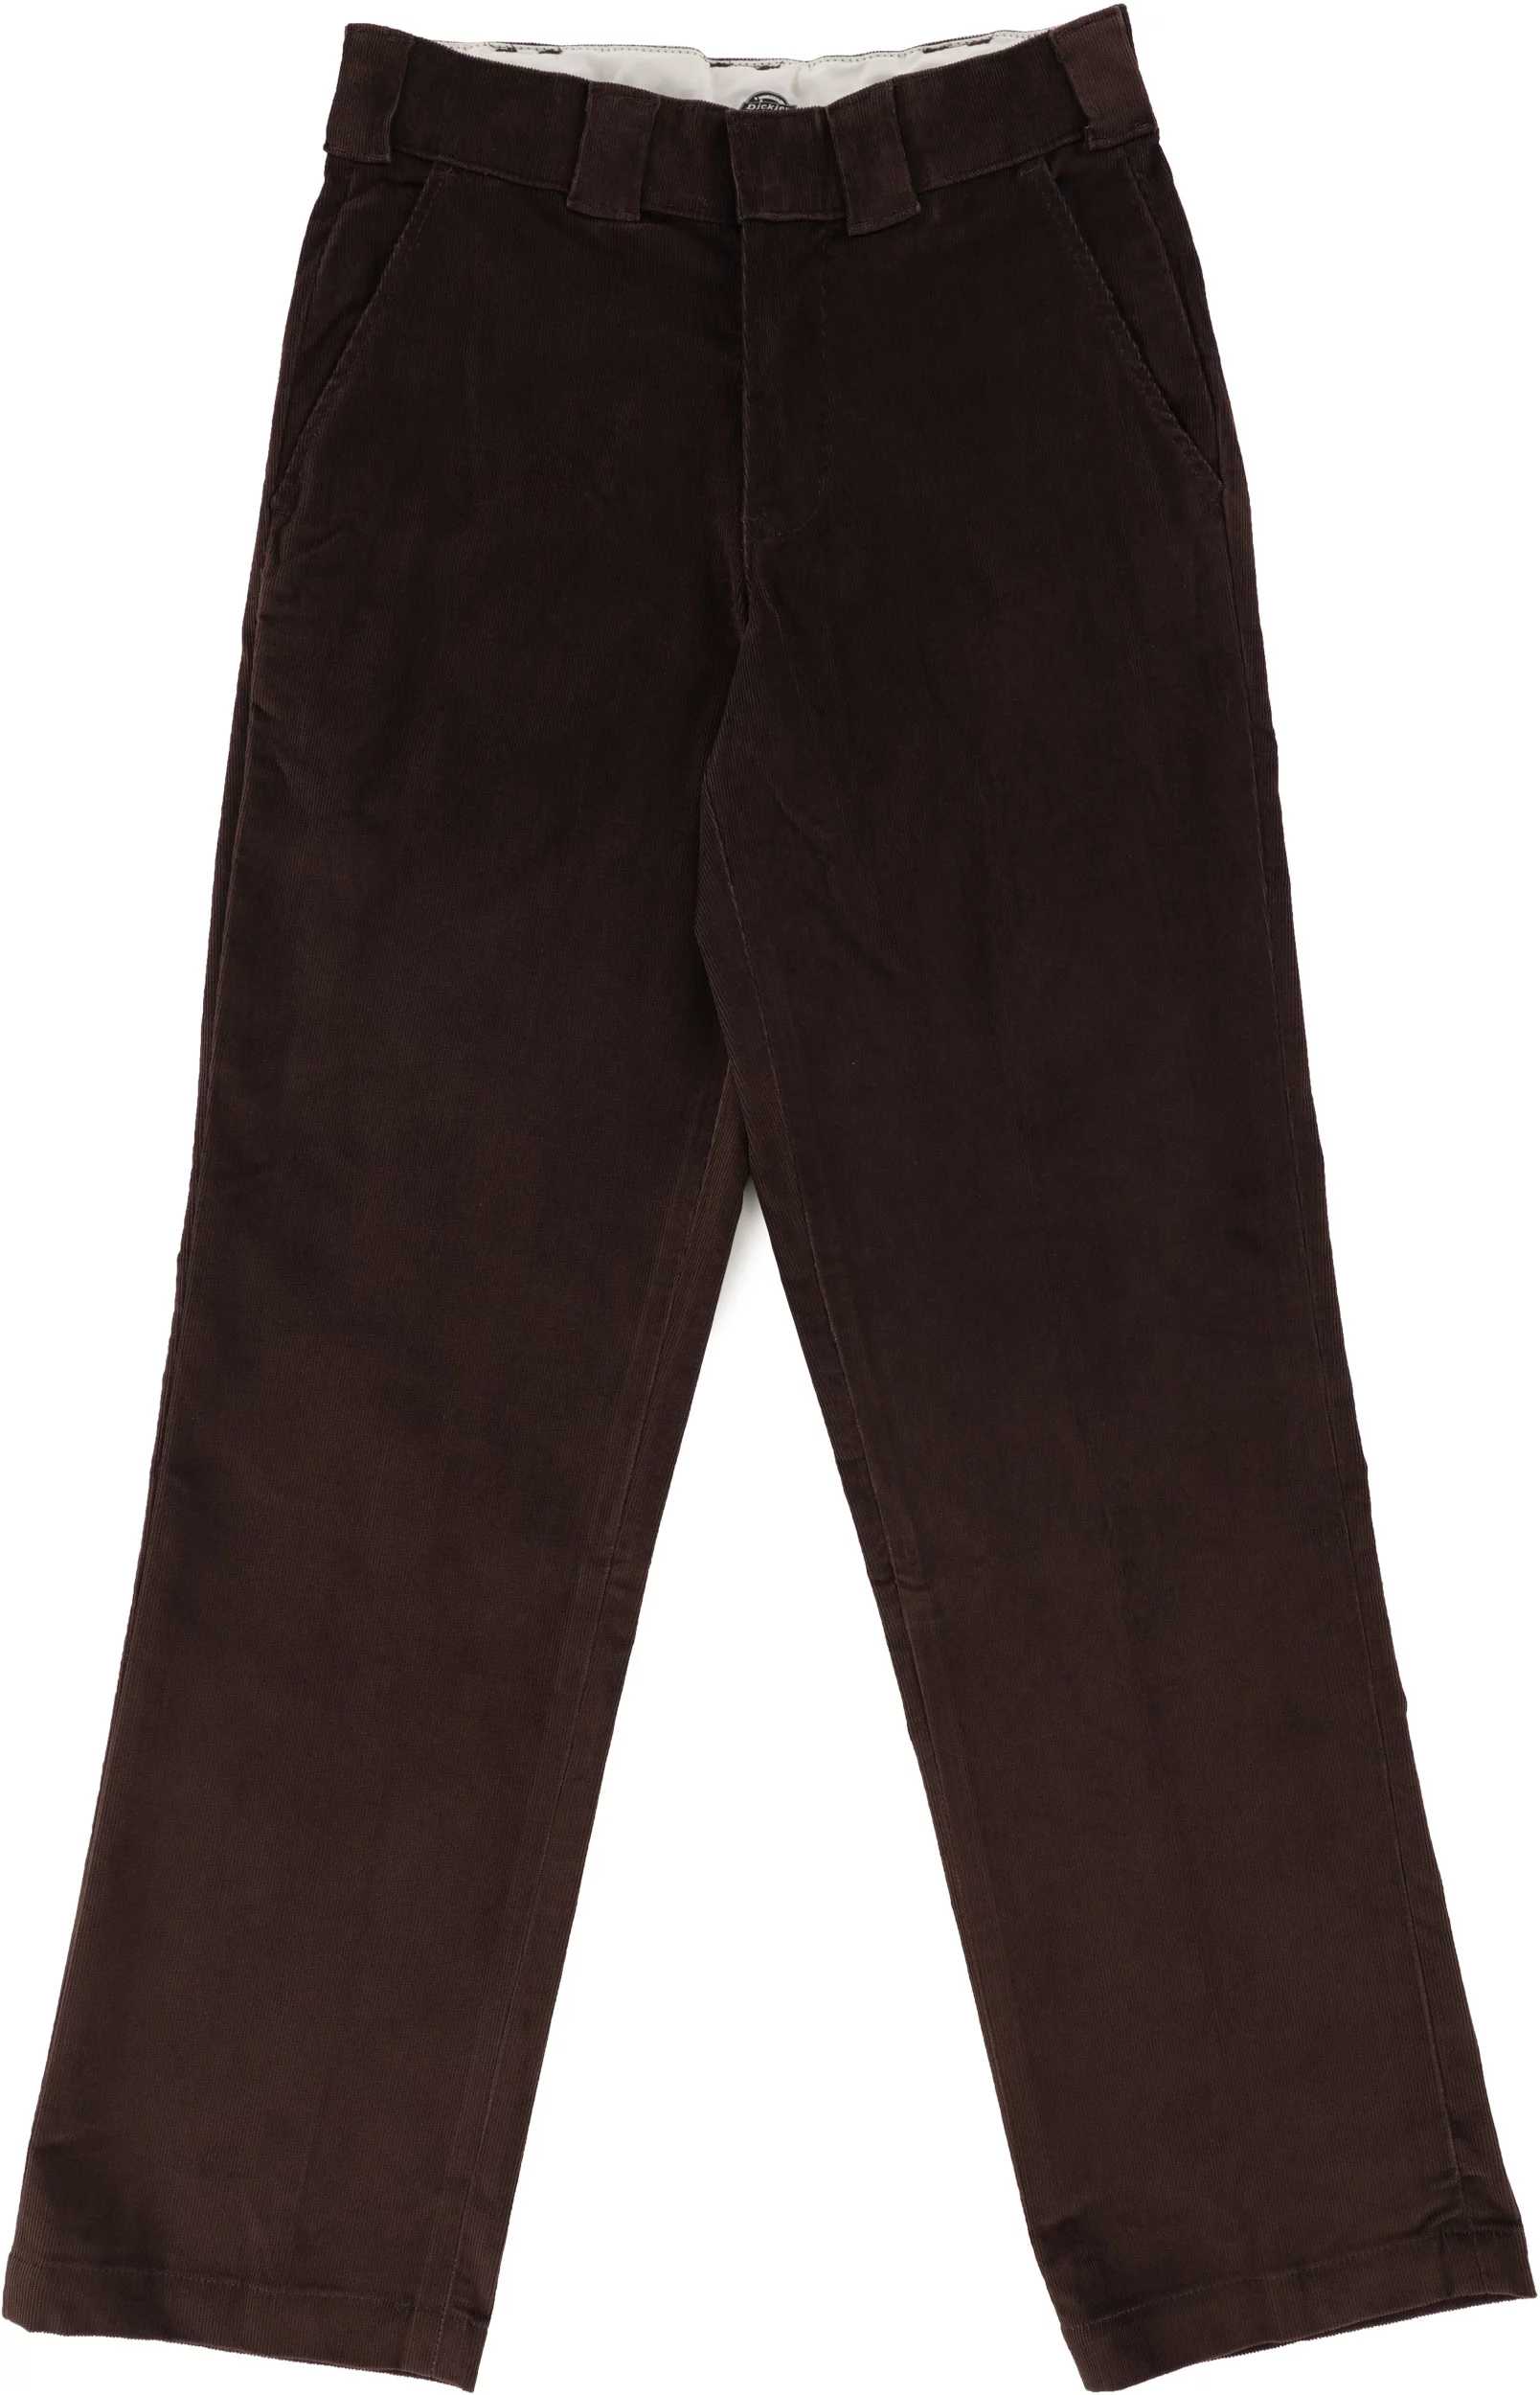 Black Plain Espresso Brown Corduroy Stretch Pants Casual Wear Men